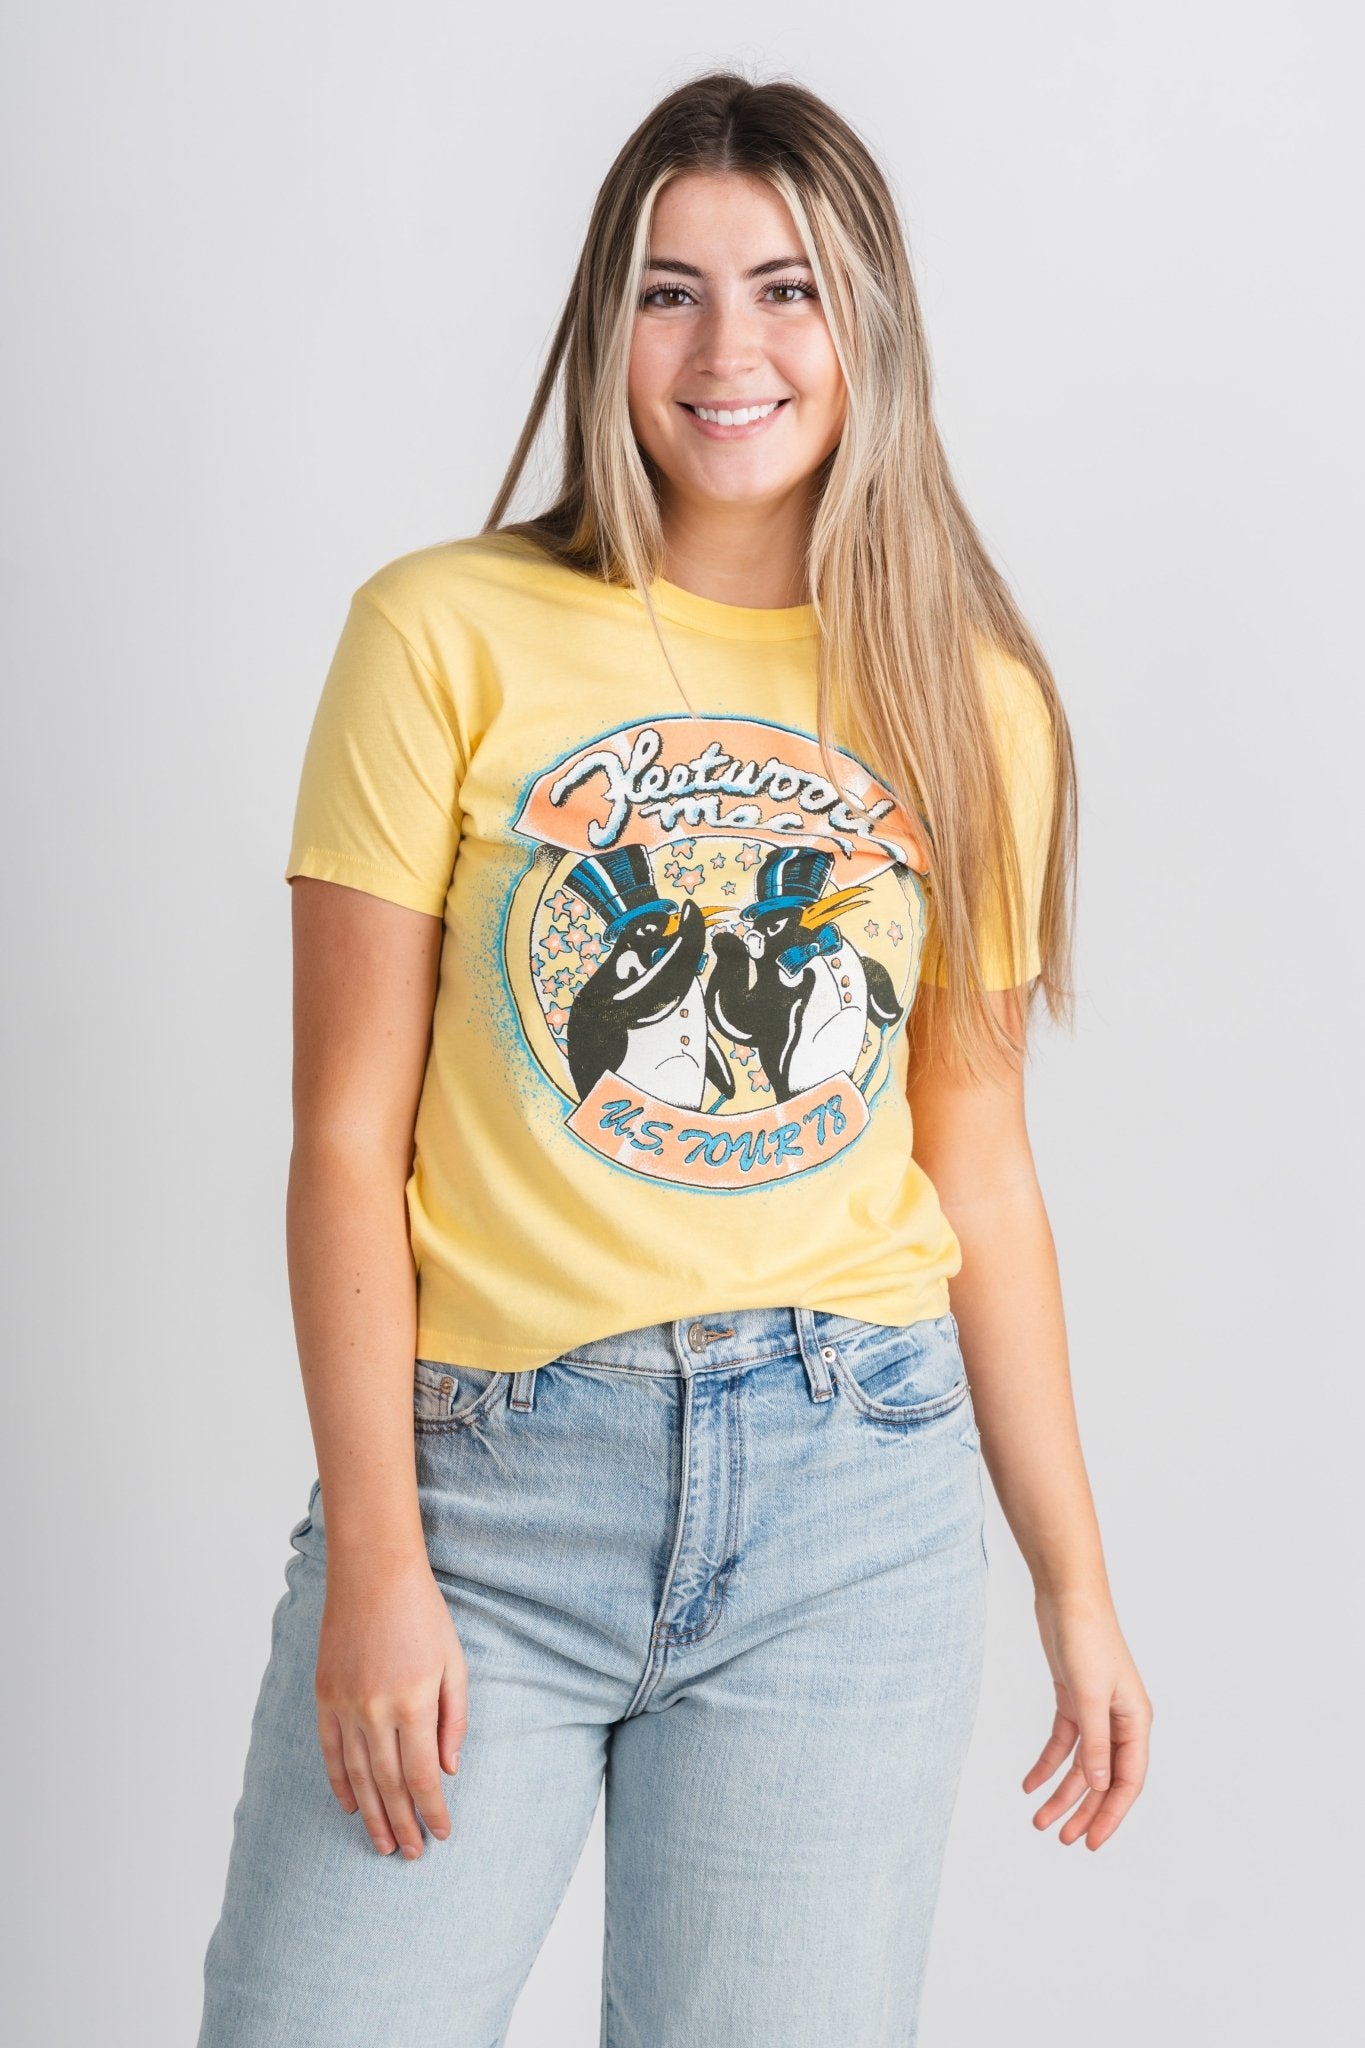 DayDreamer Fleetwood Mac tour 78 ringer t-shirt yellow bloom - Stylish Band T-Shirts and Sweatshirts at Lush Fashion Lounge Boutique in Oklahoma City